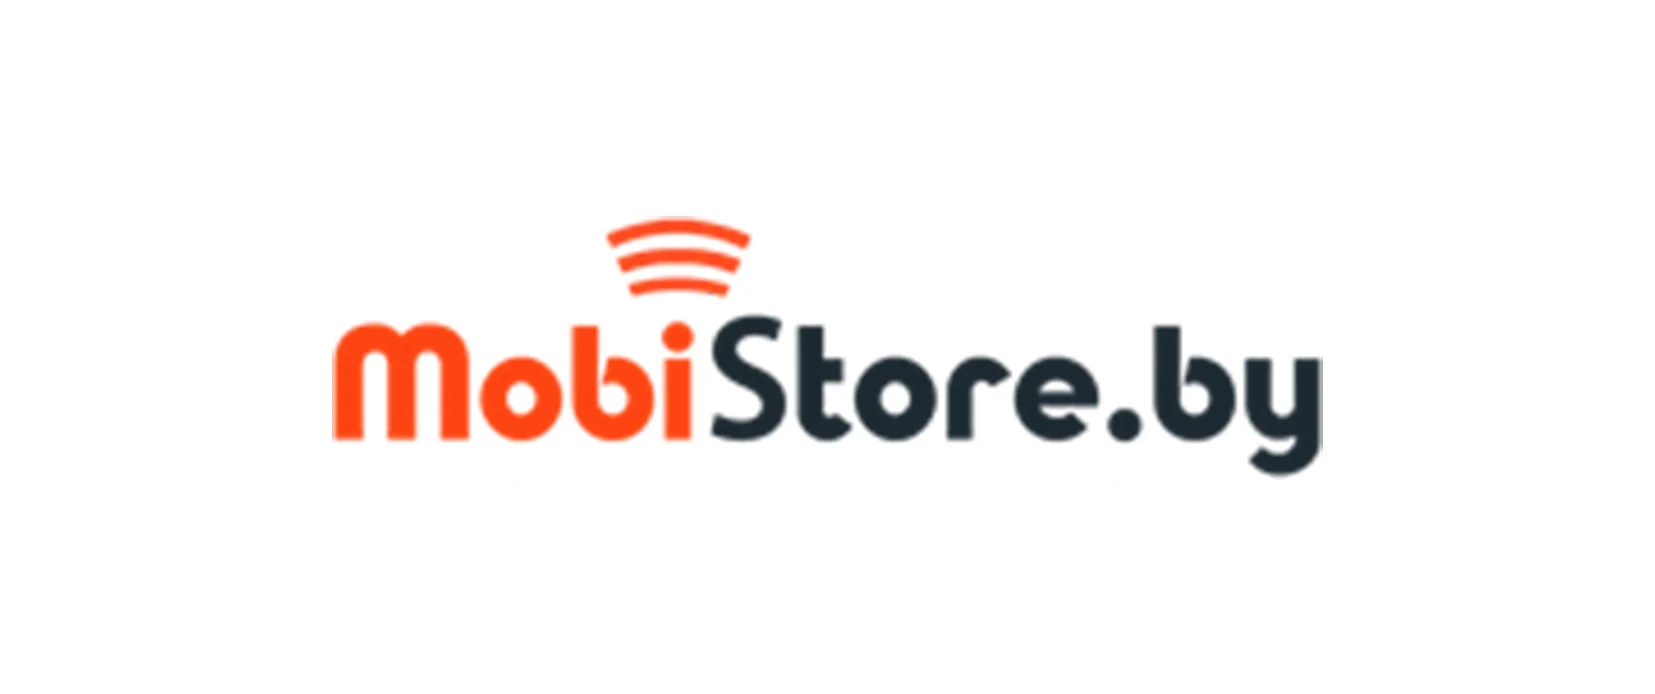 MobiStore.by - интернет-магазин